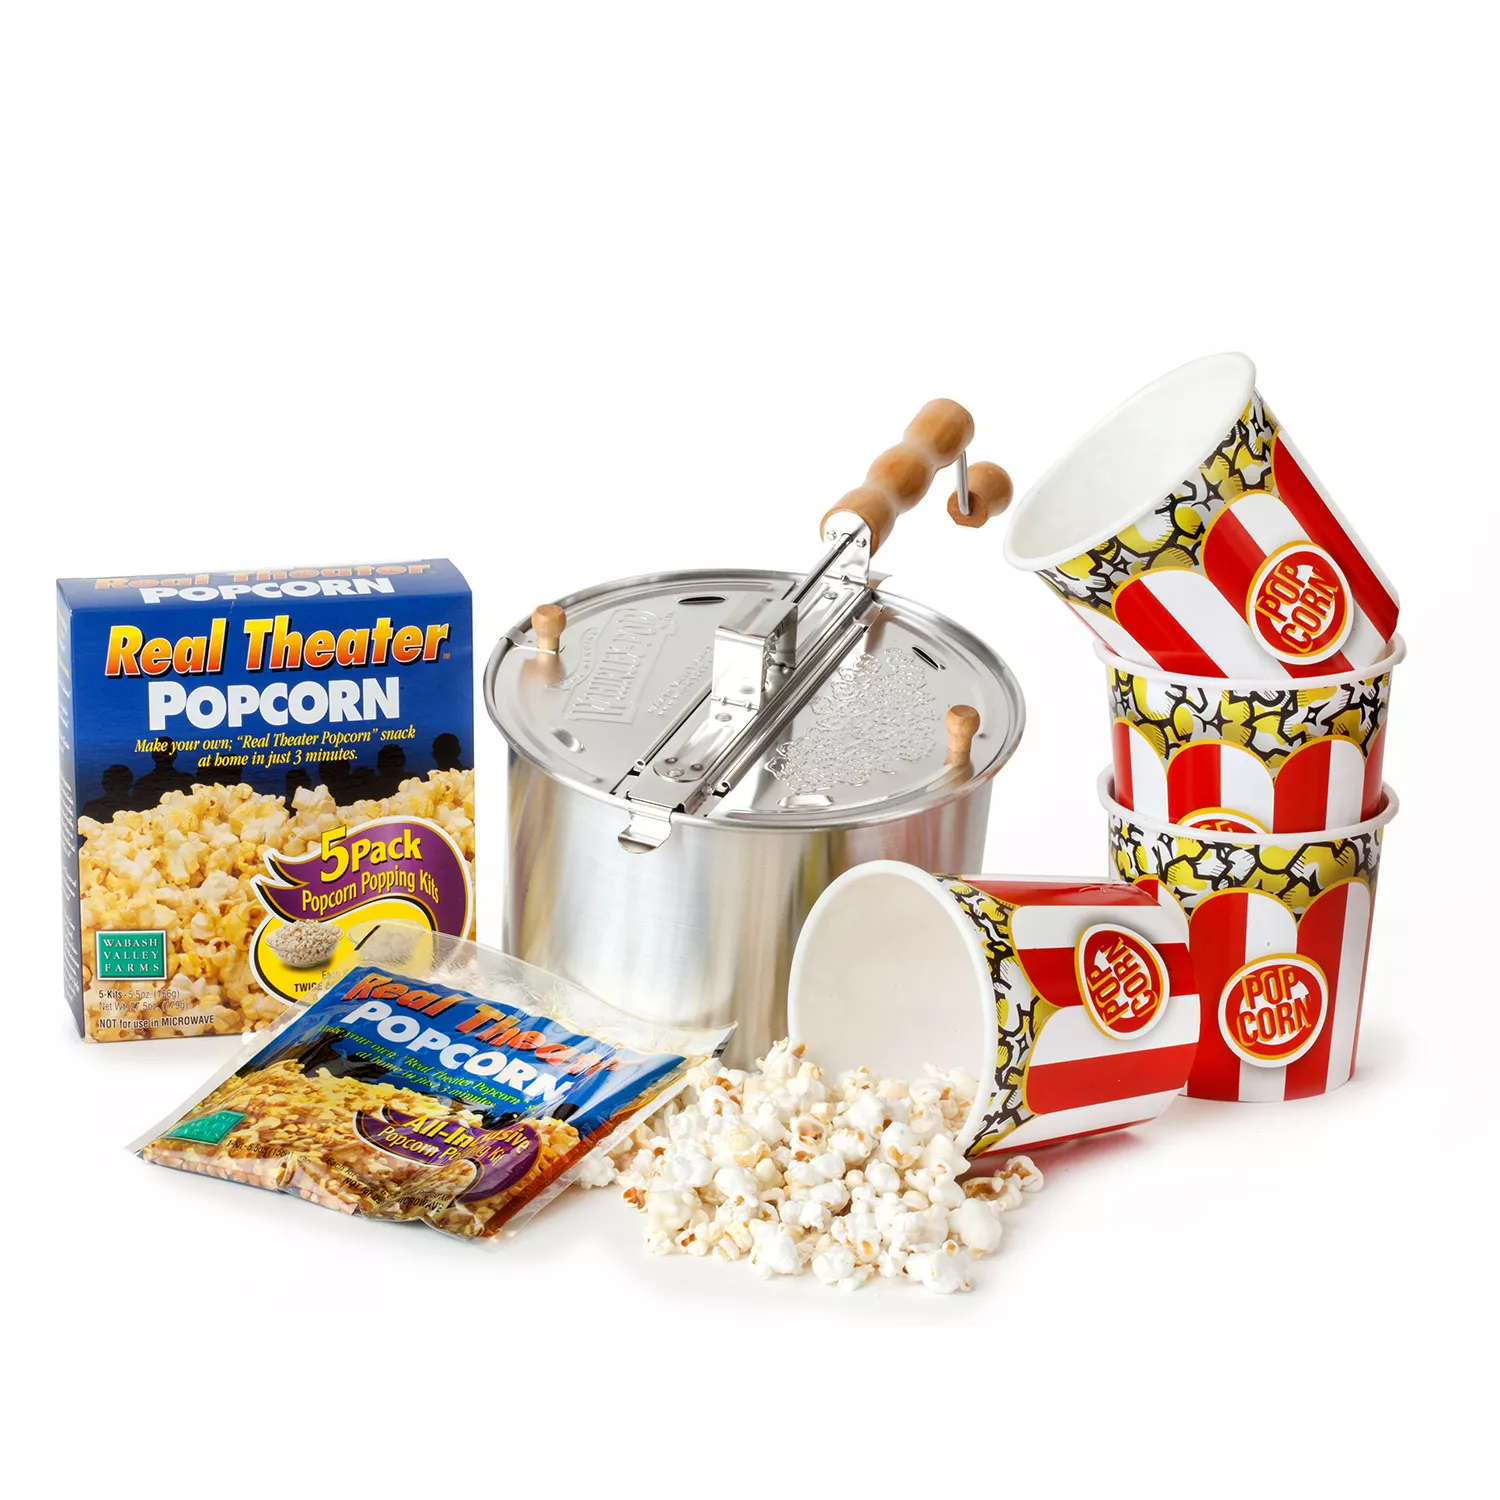 W&P Personal Popcorn Popper - Charcoal